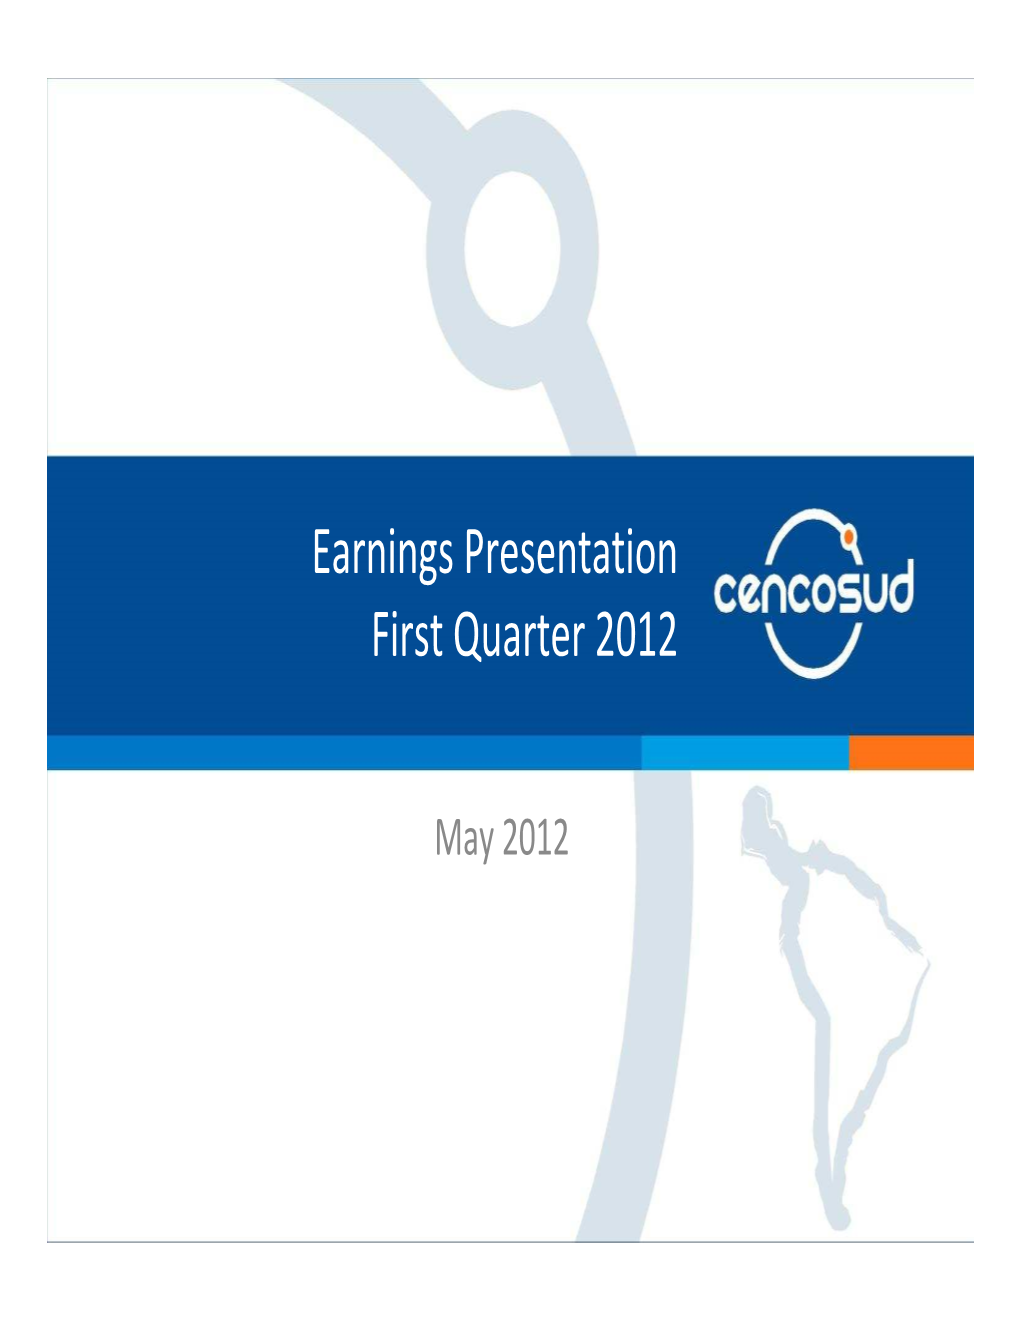 Earnings Presentation First Quarter 2012